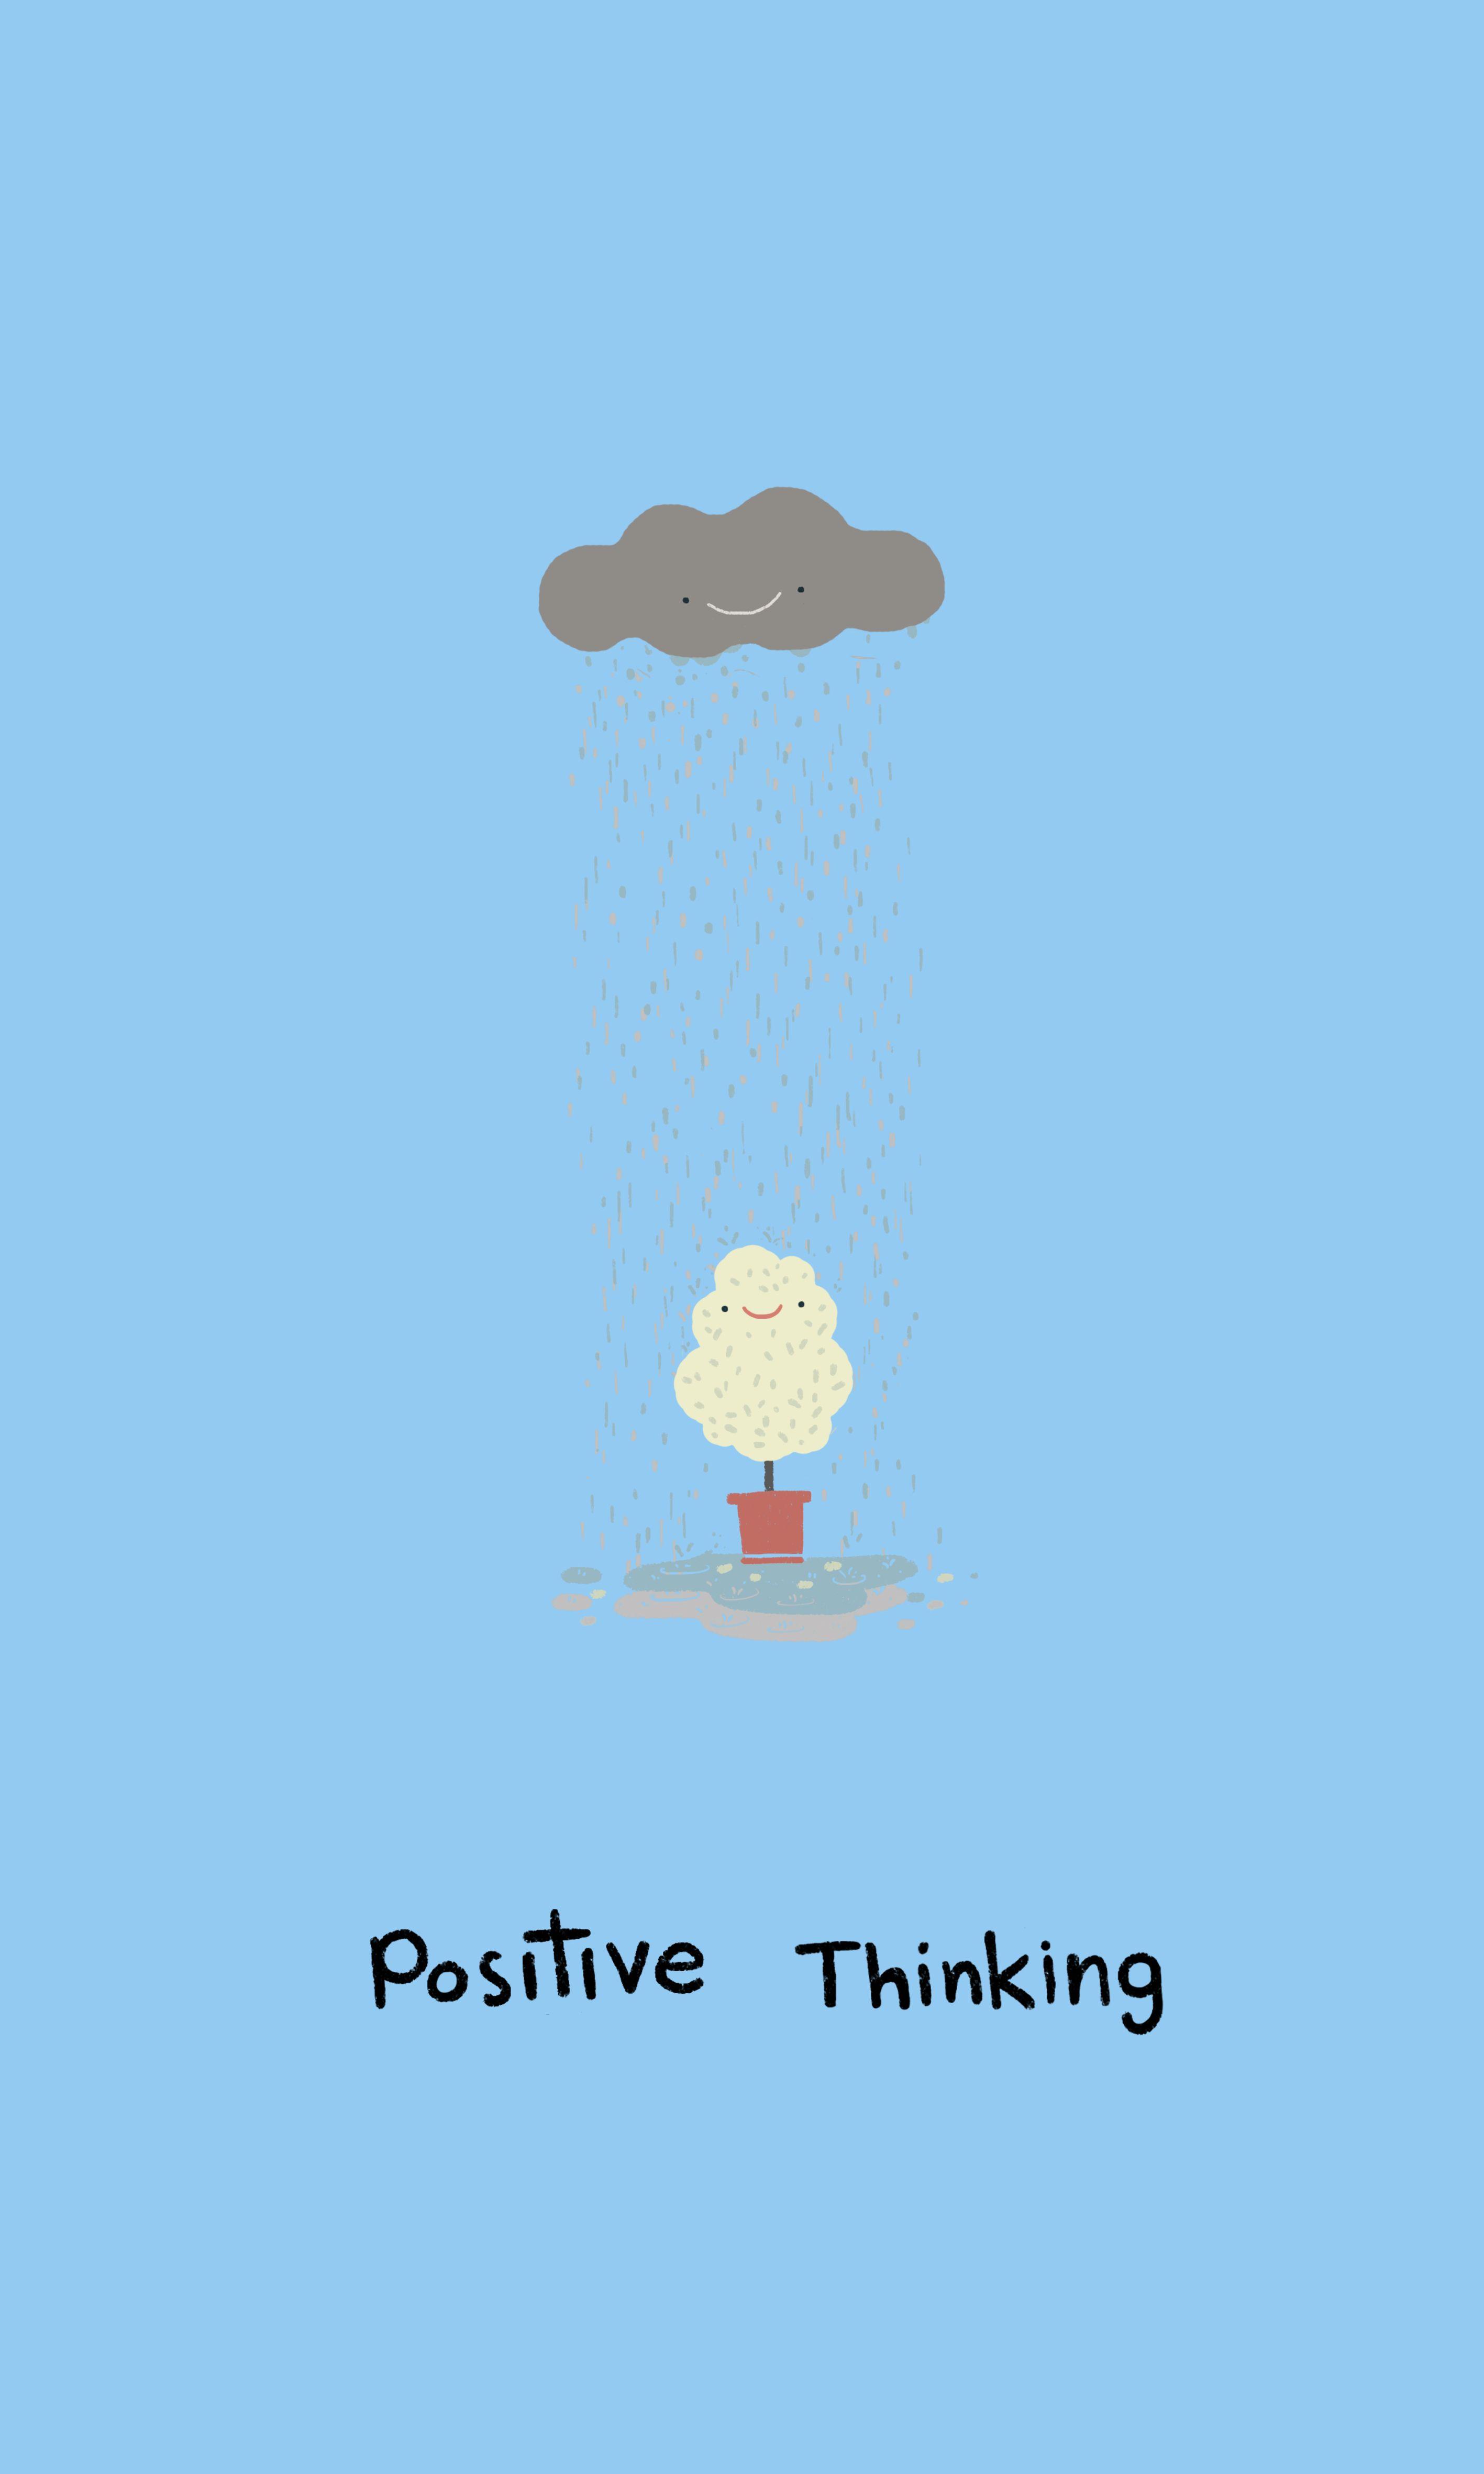 Positive Thinking Wallpaper in Illustrator